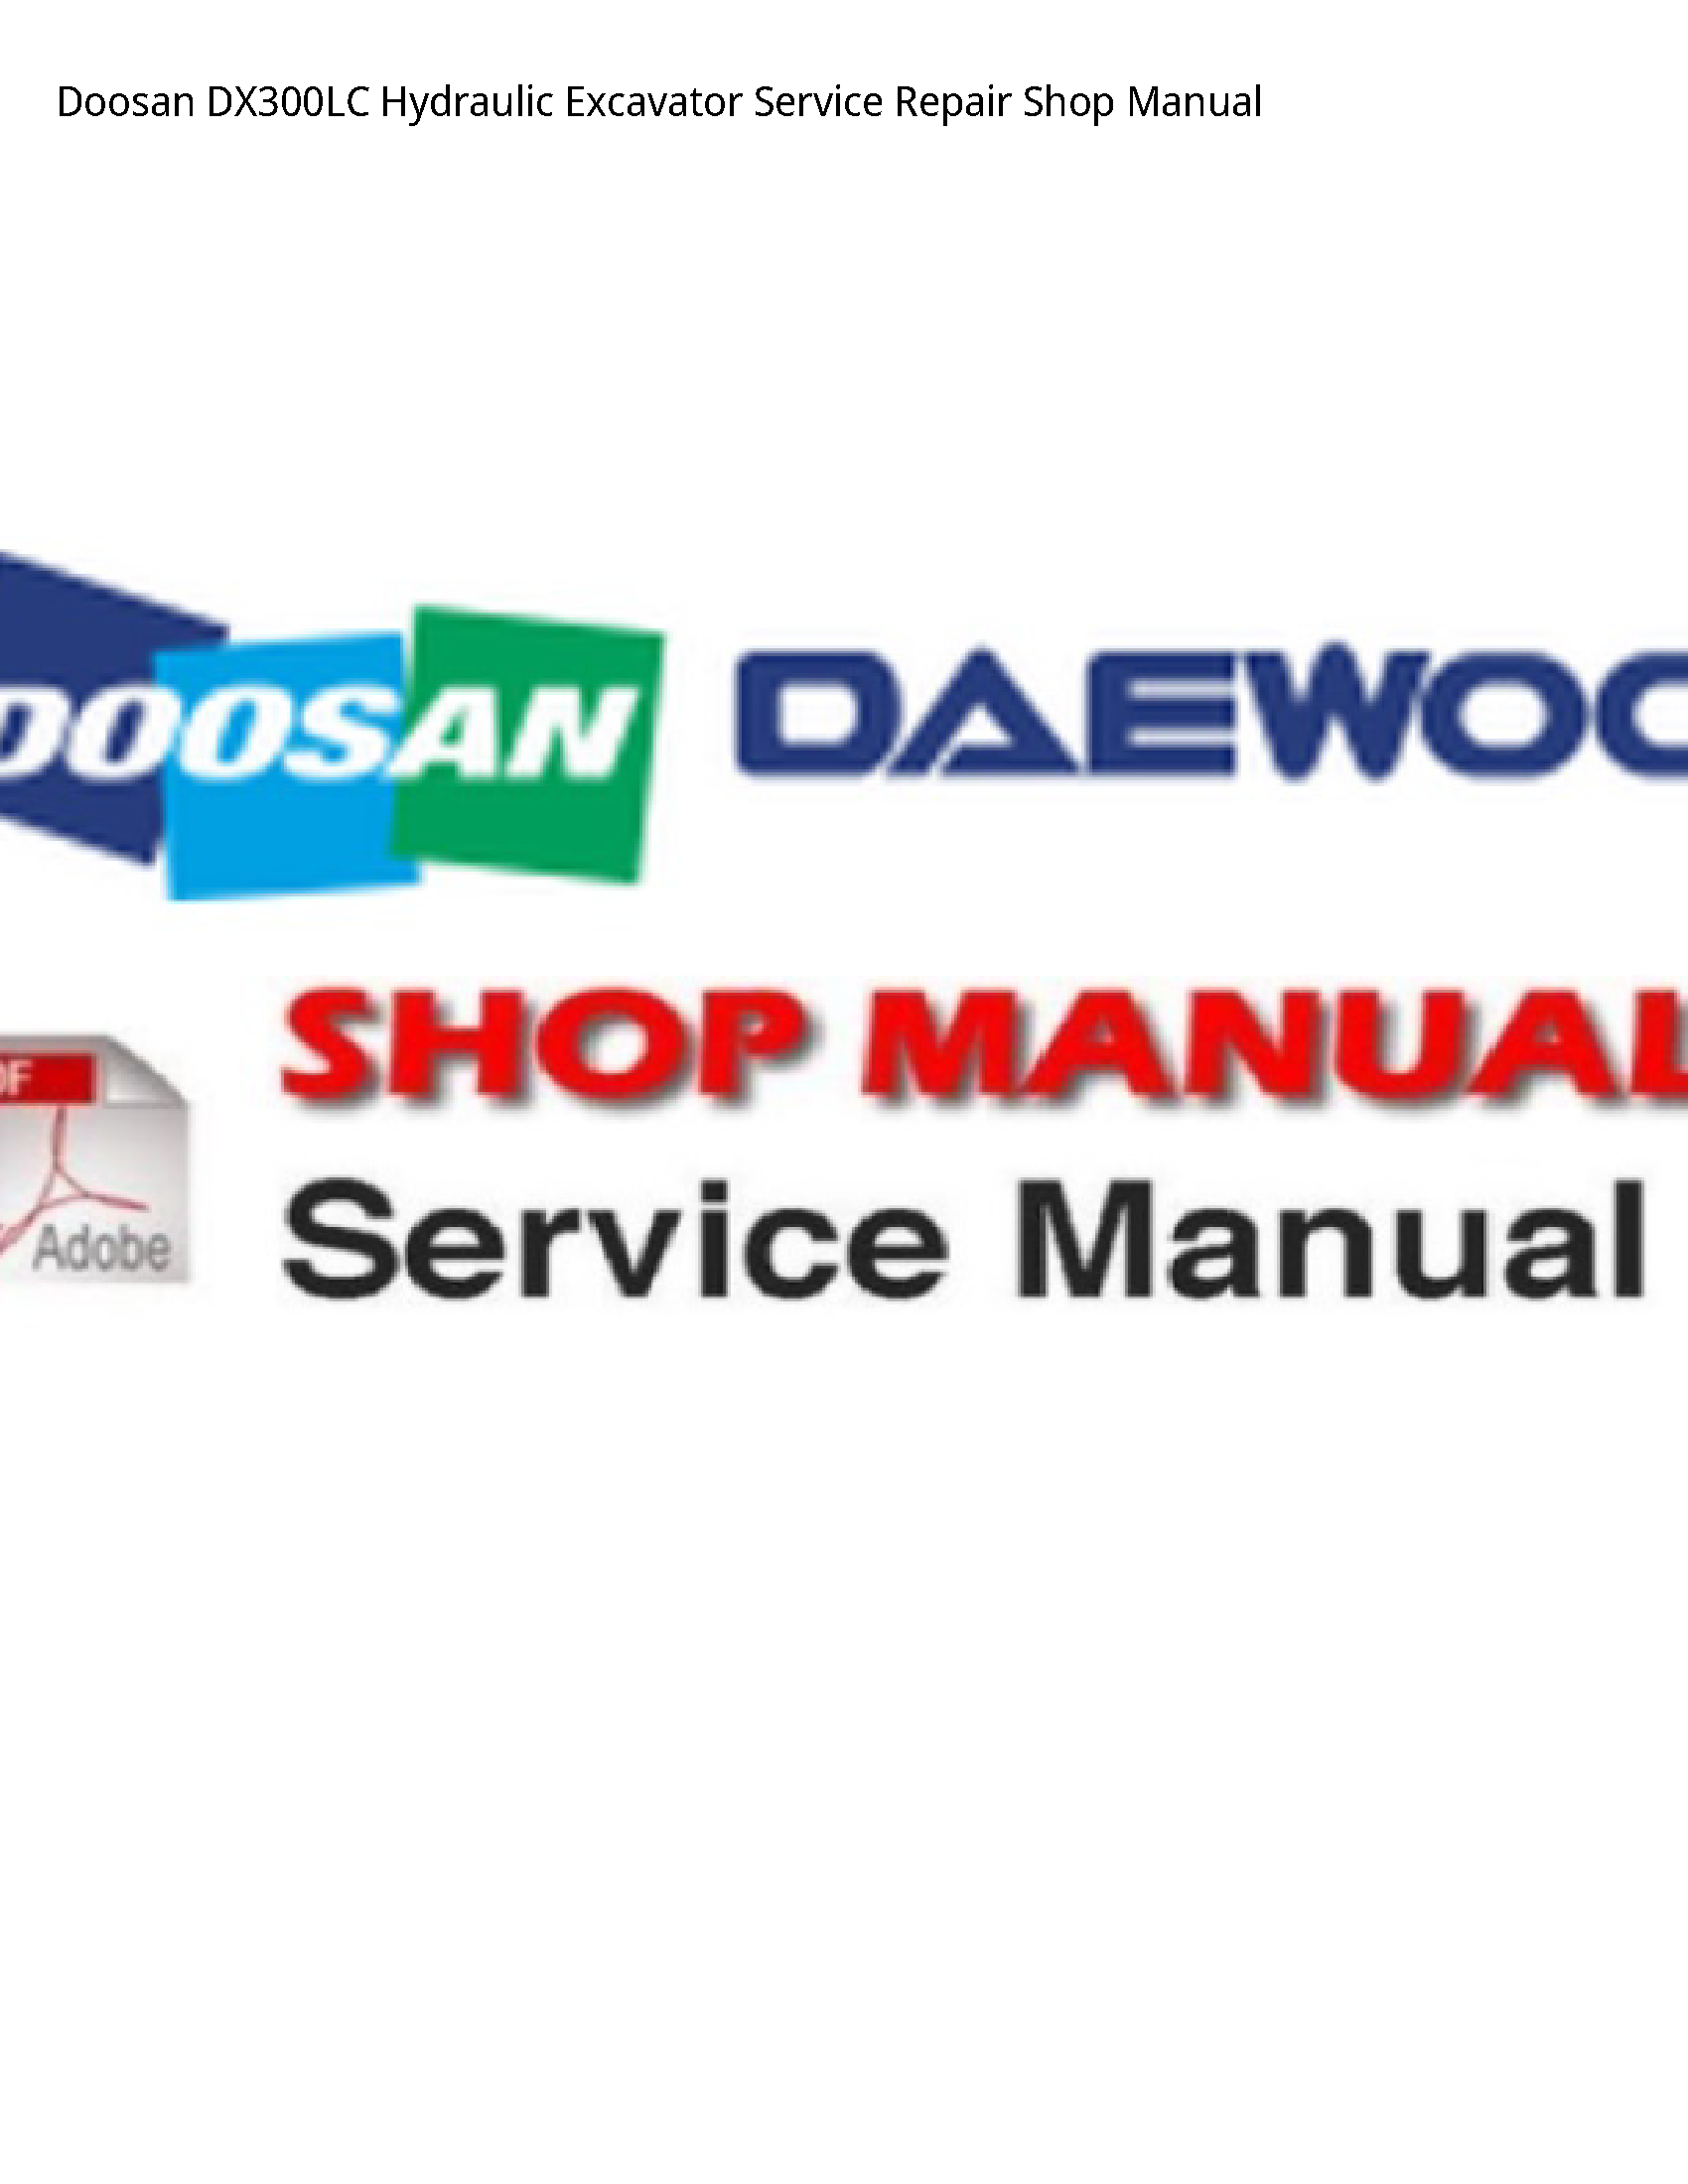 Doosan DX300LC Hydraulic Excavator manual